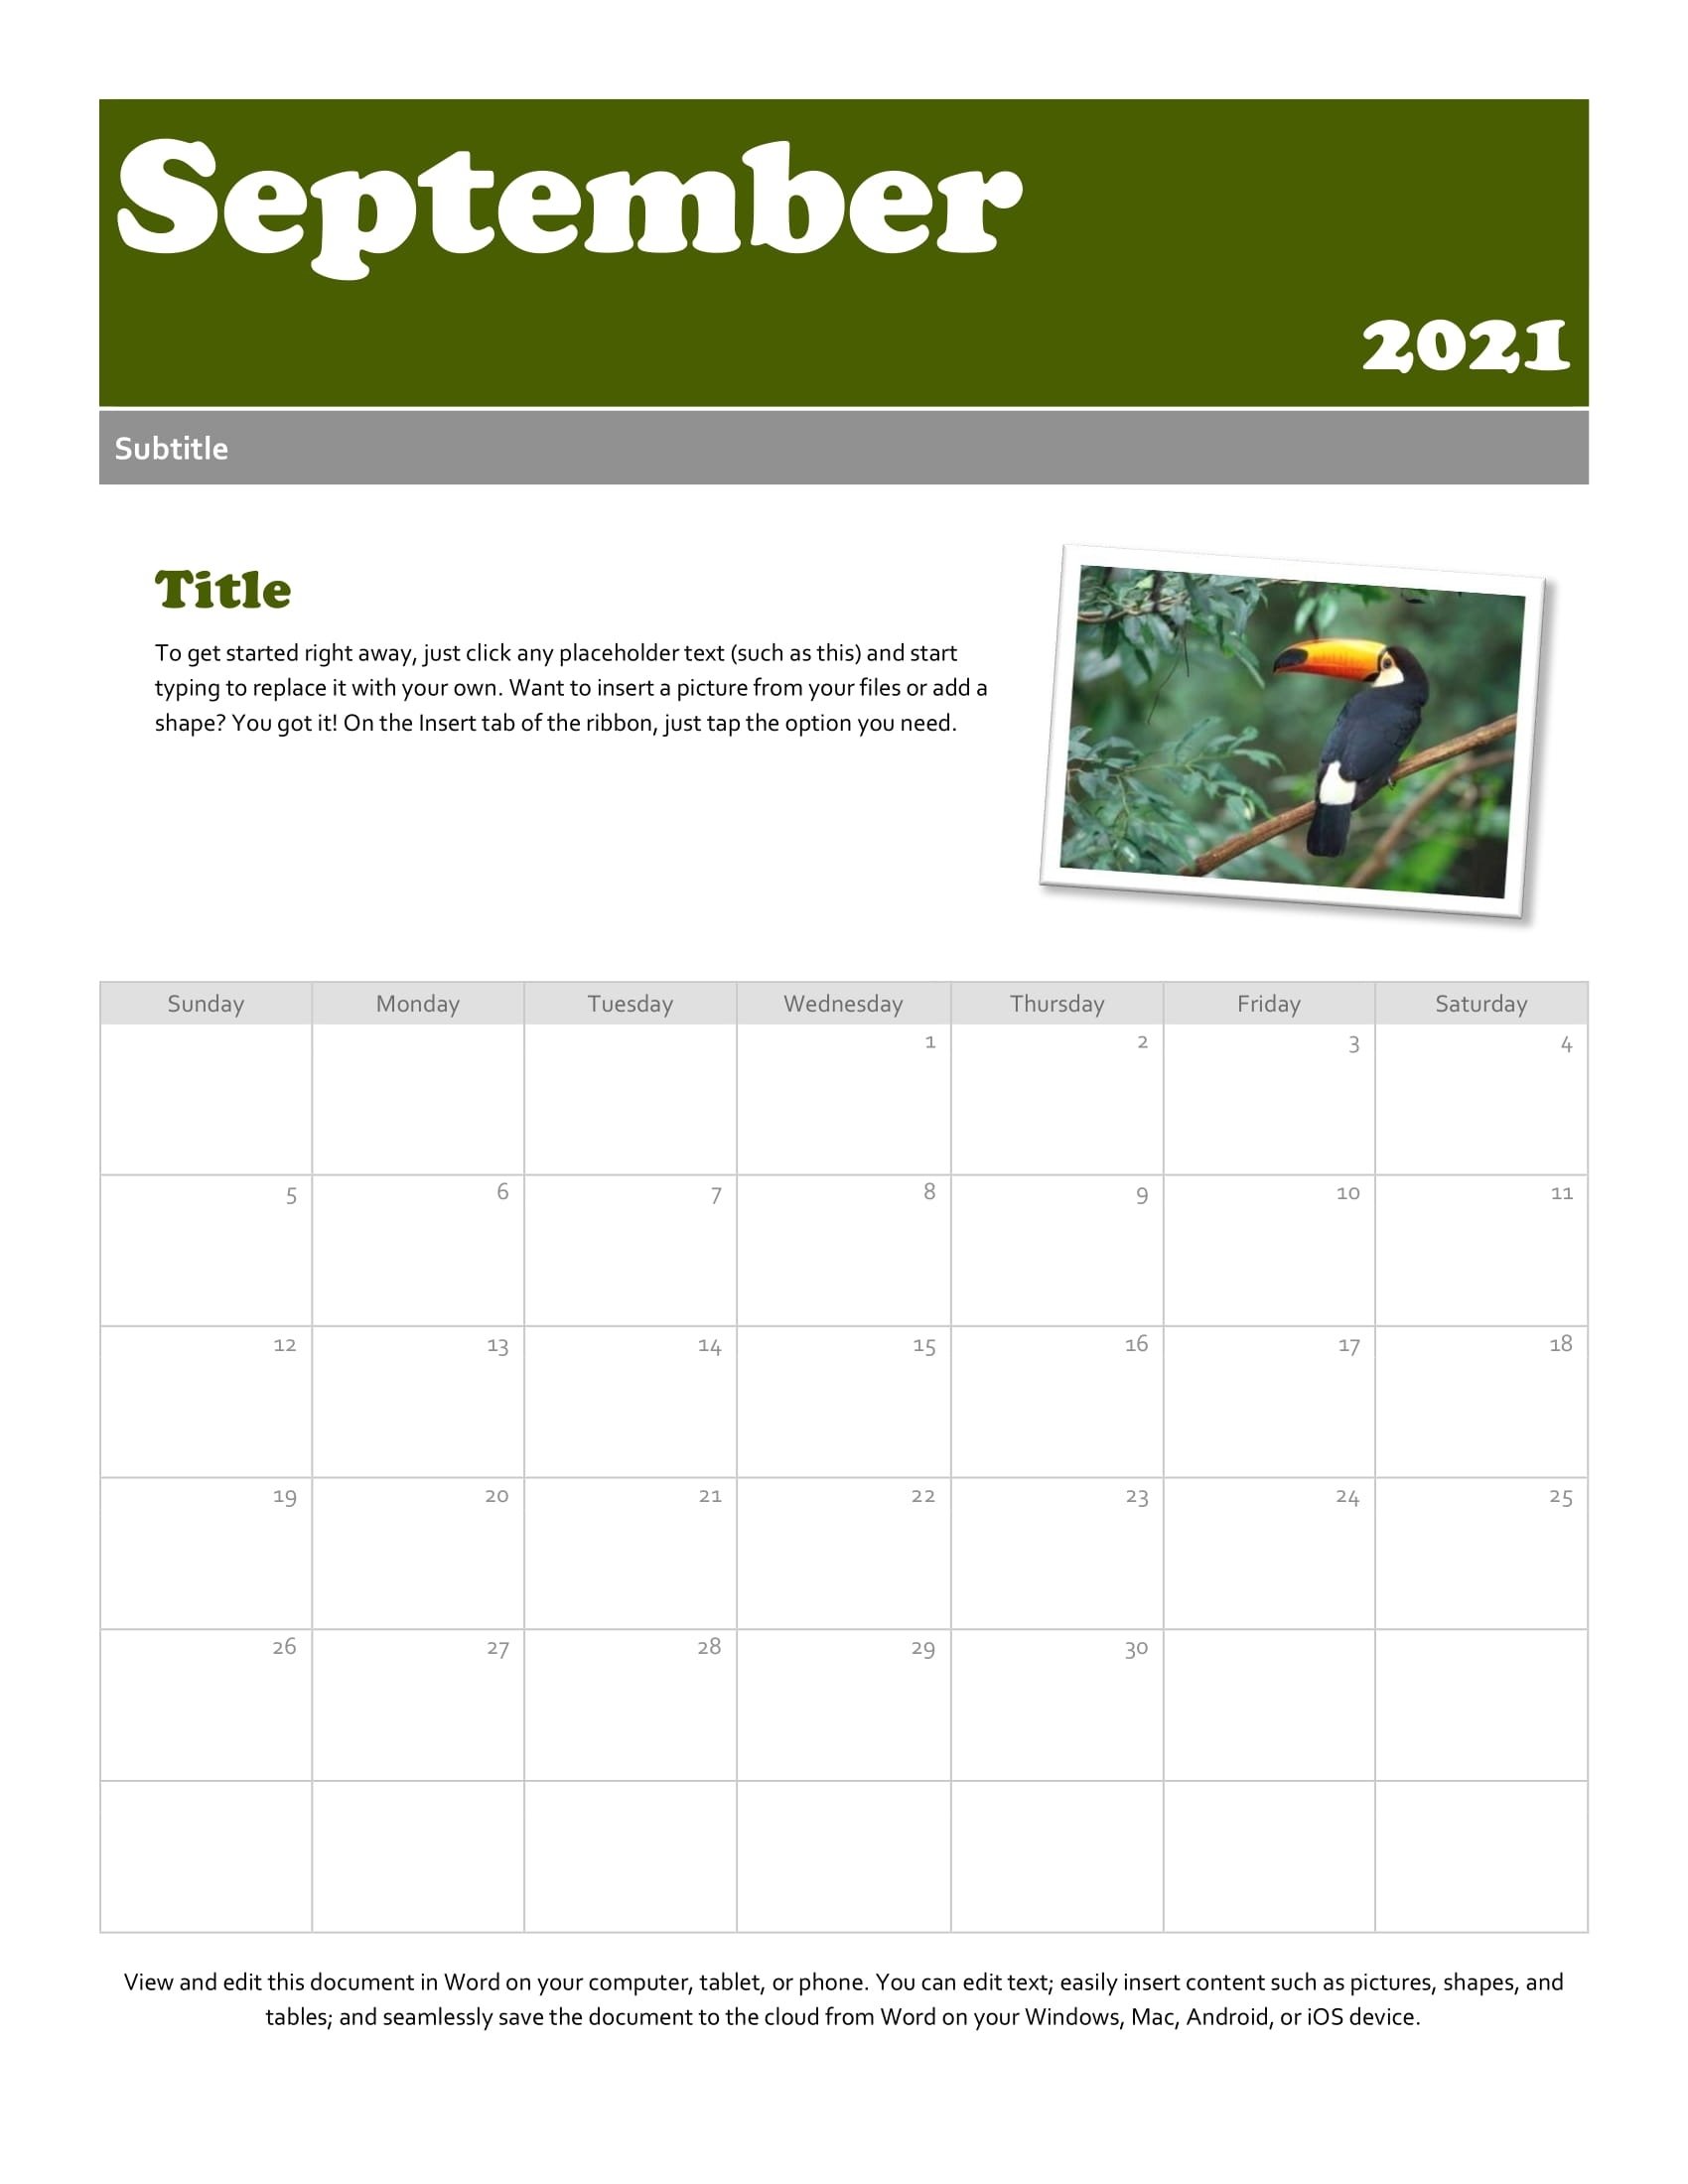 Print A Calendar For September 2021 - Printable Calendar Template 2020 2021 September 2020 To January 2021 Calendar